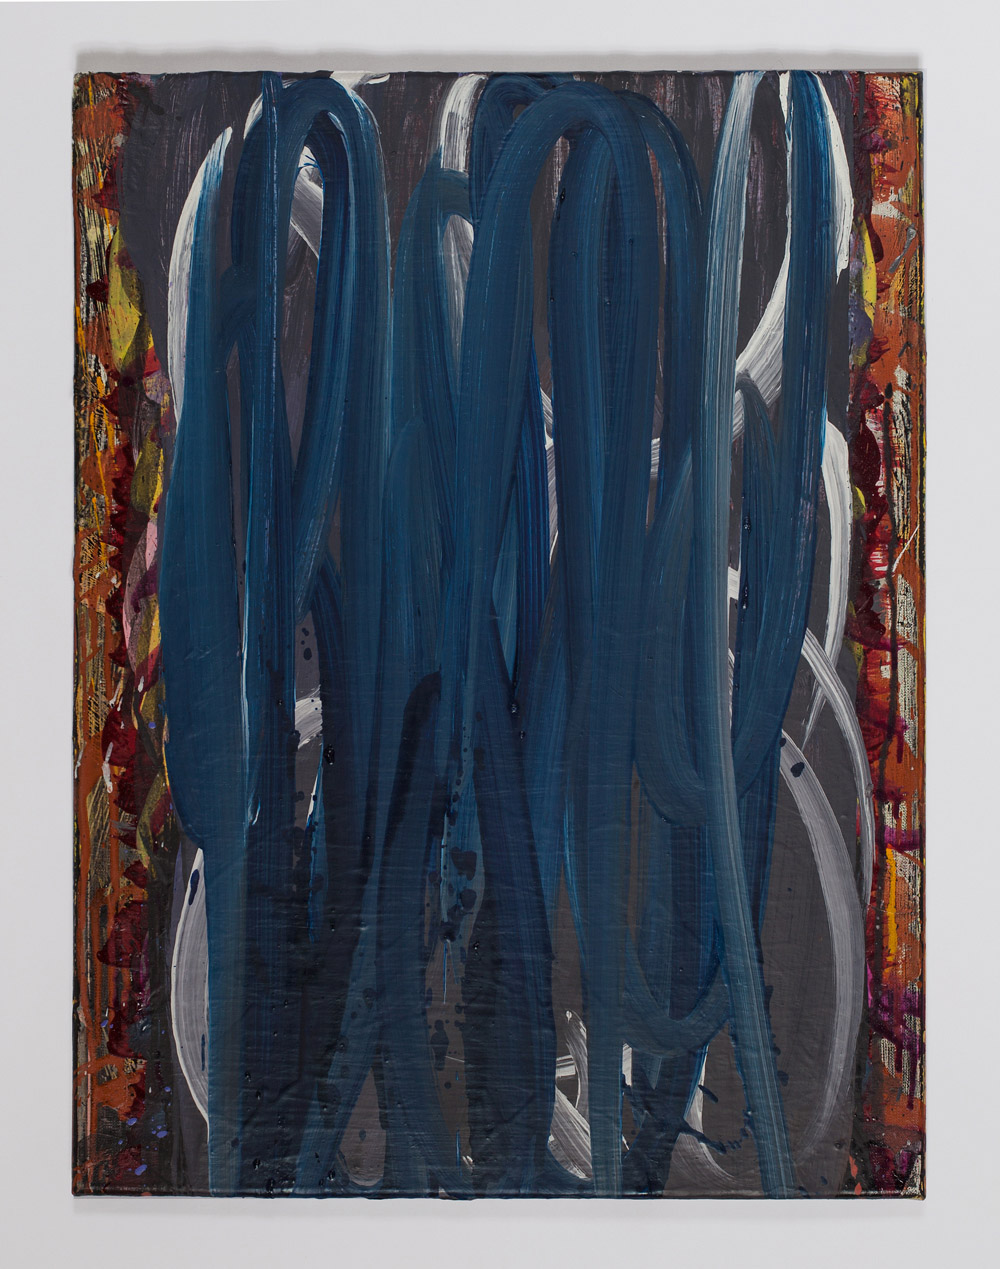 Make way, 2013, oil on canvas, 60.3x45.3 cm